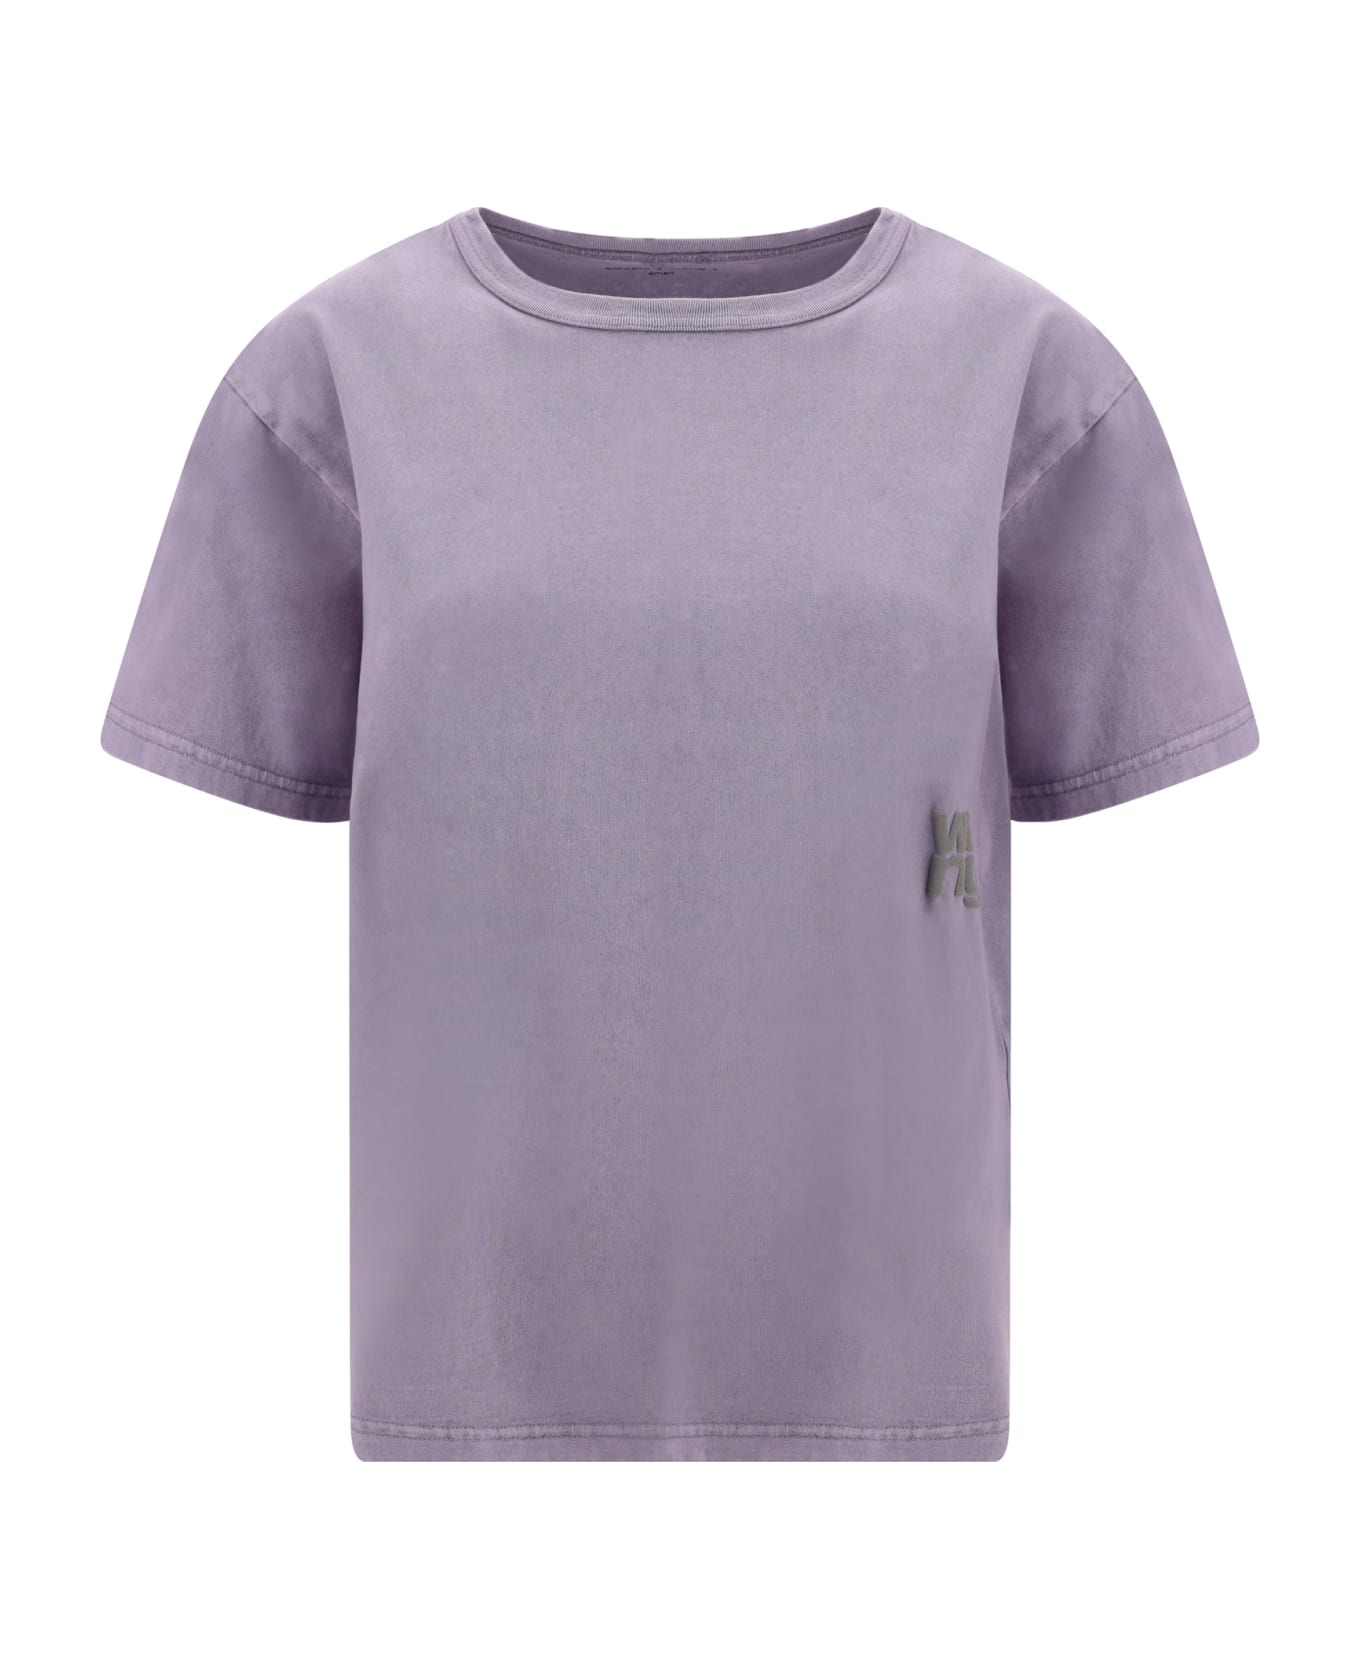 Alexander Wang Essential T-shirt - A Acid Pink Tシャツ